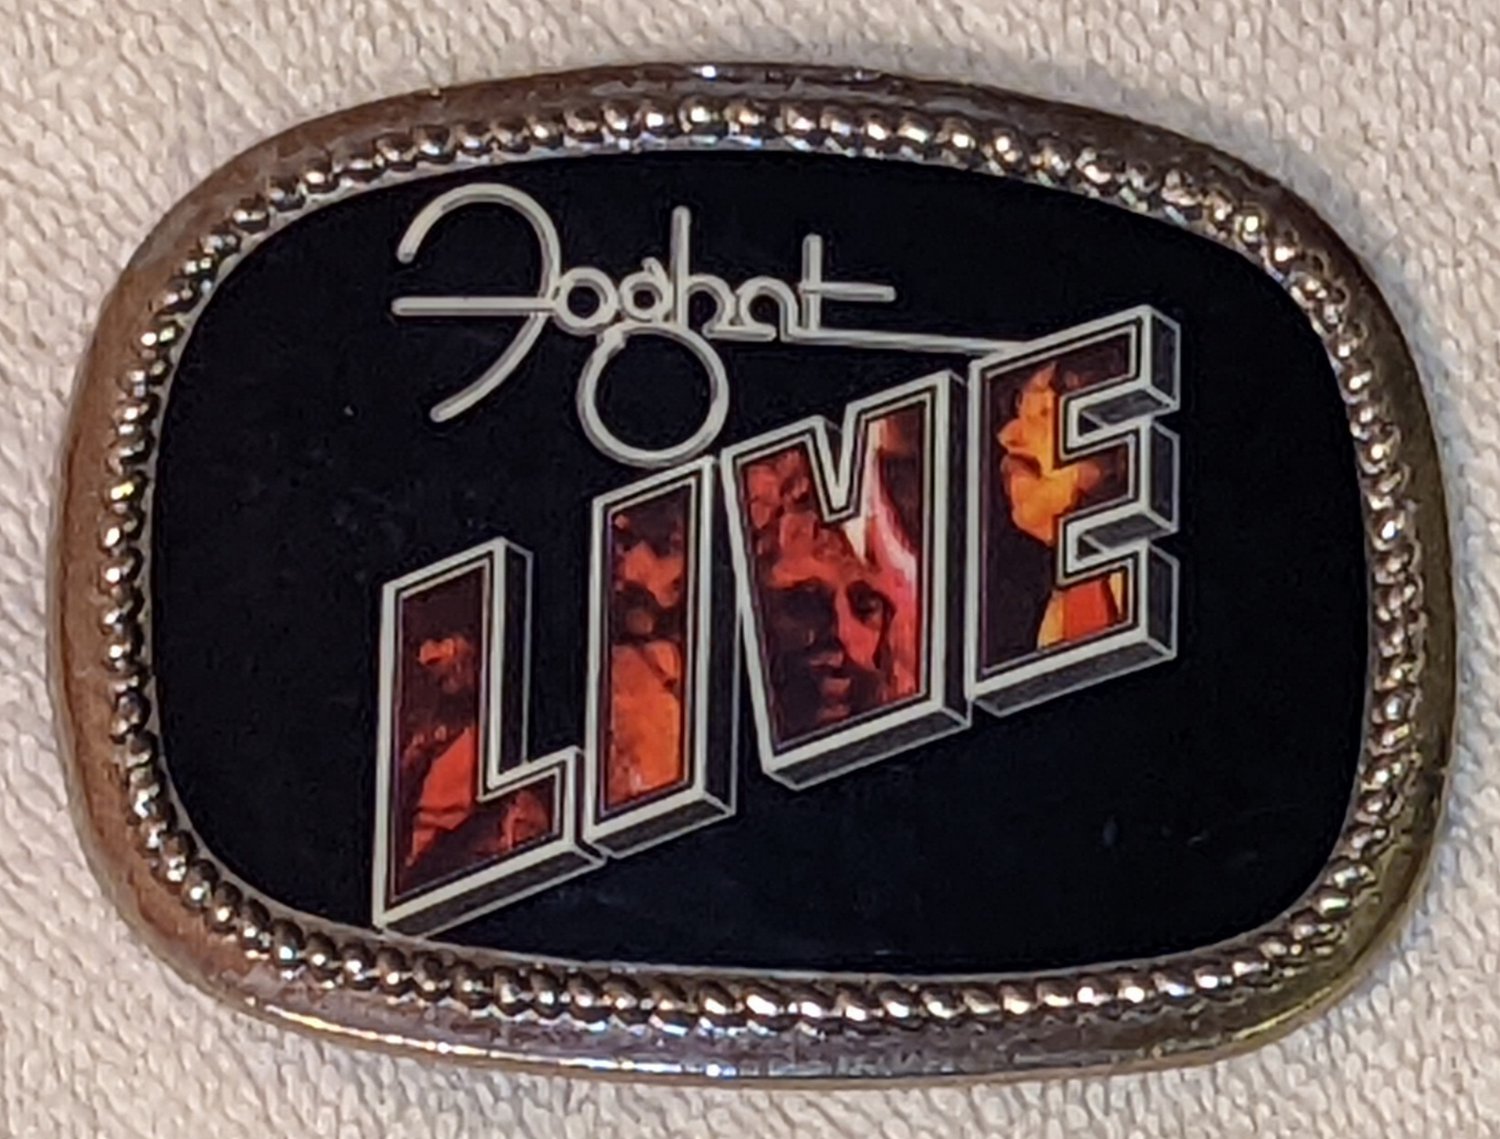 Foghat Live Metal Belt Buckle Rock & Roll Band Midwestern